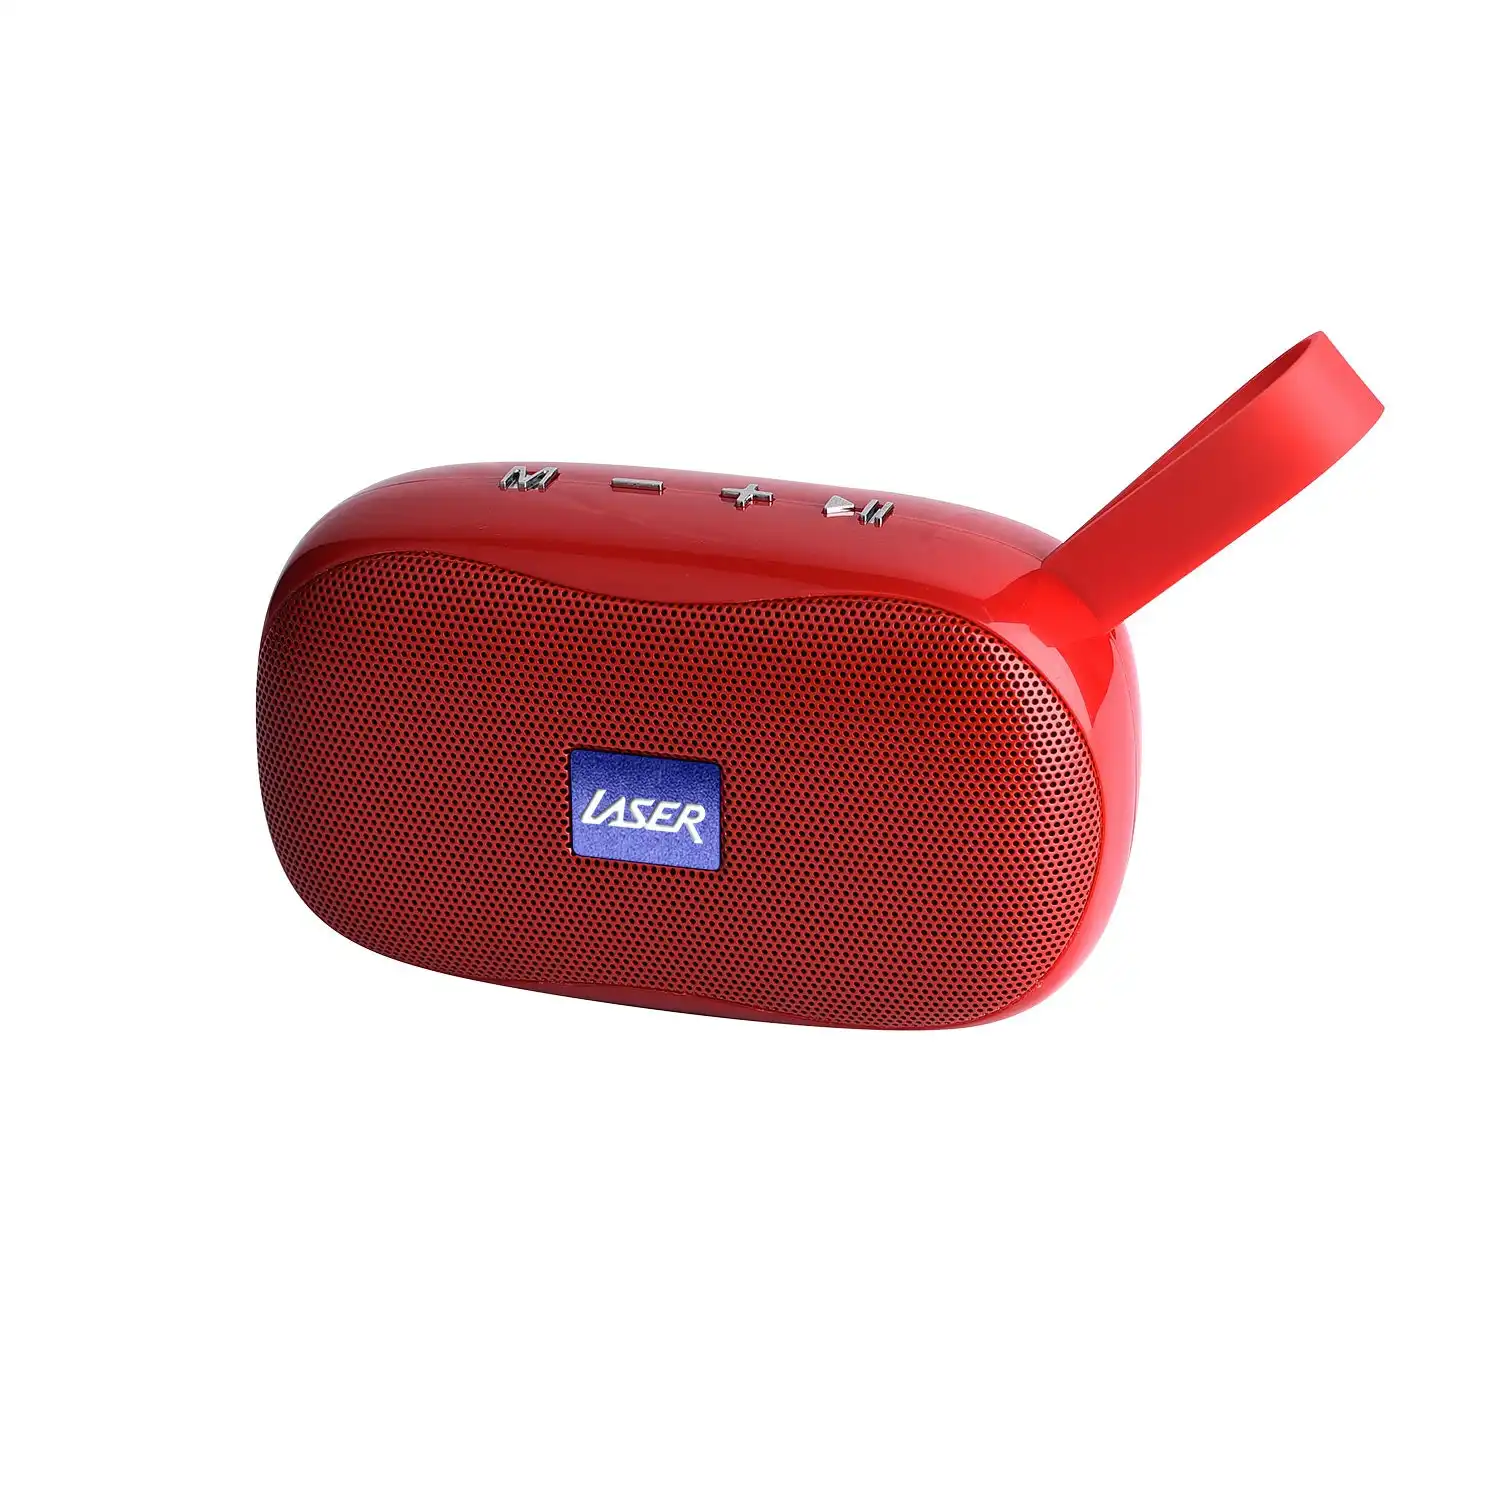 Laser Pocket Portable Bluetooth FM TWS USB Wireless Speaker - Red